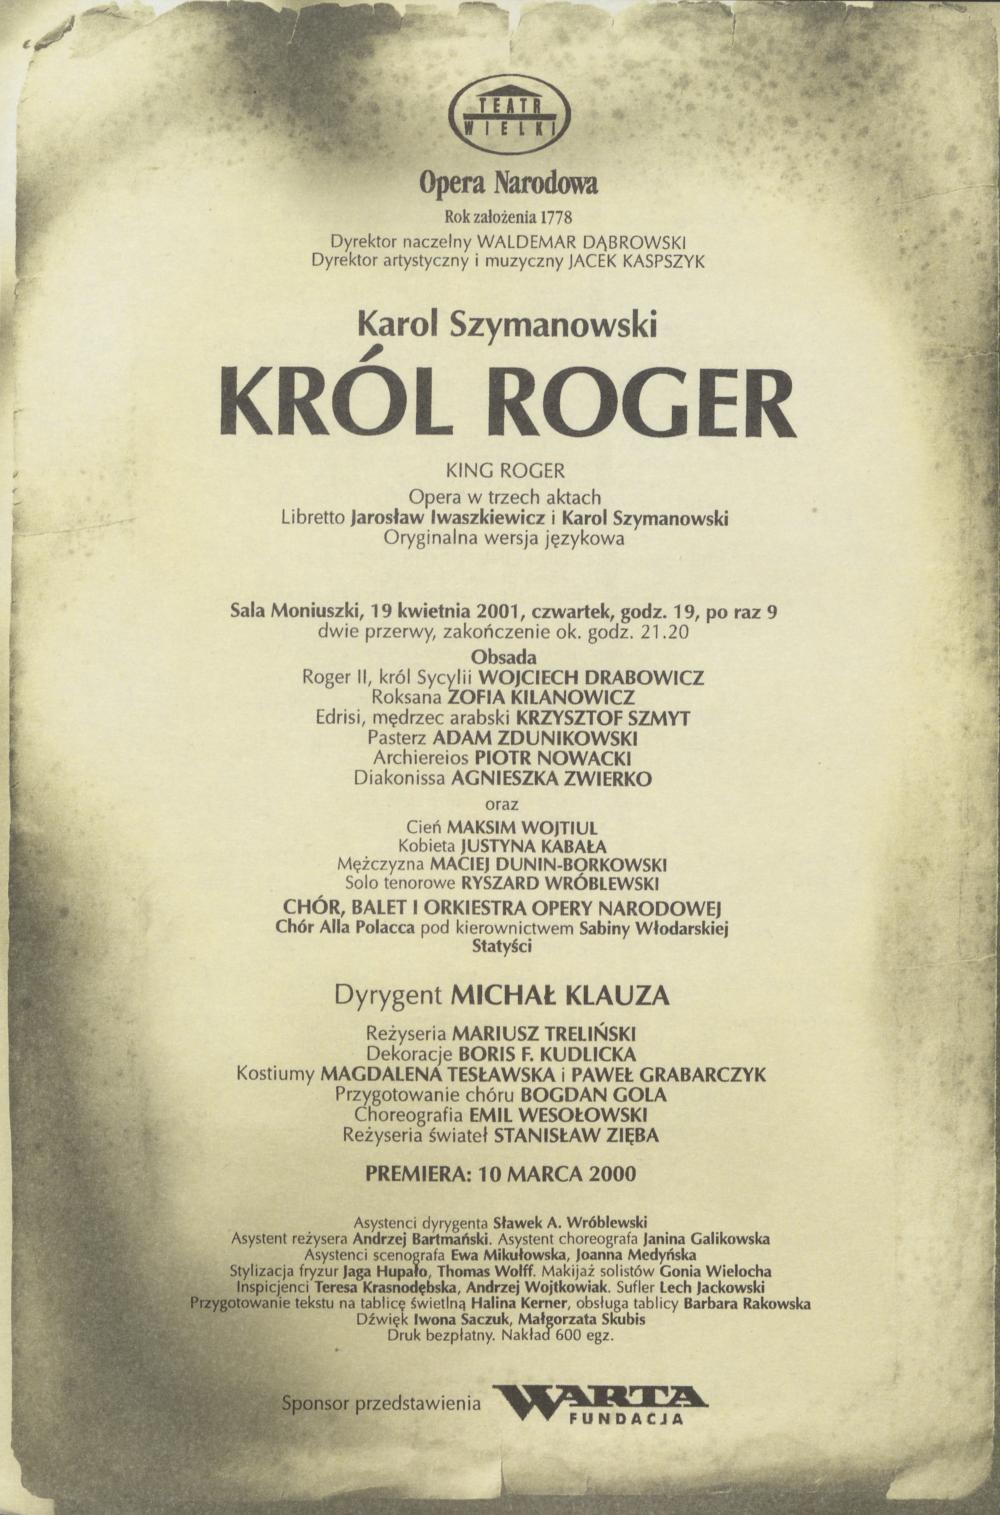 Wkładka obsadowa „Król Roger” Karol Szymanowski 19-04-2001